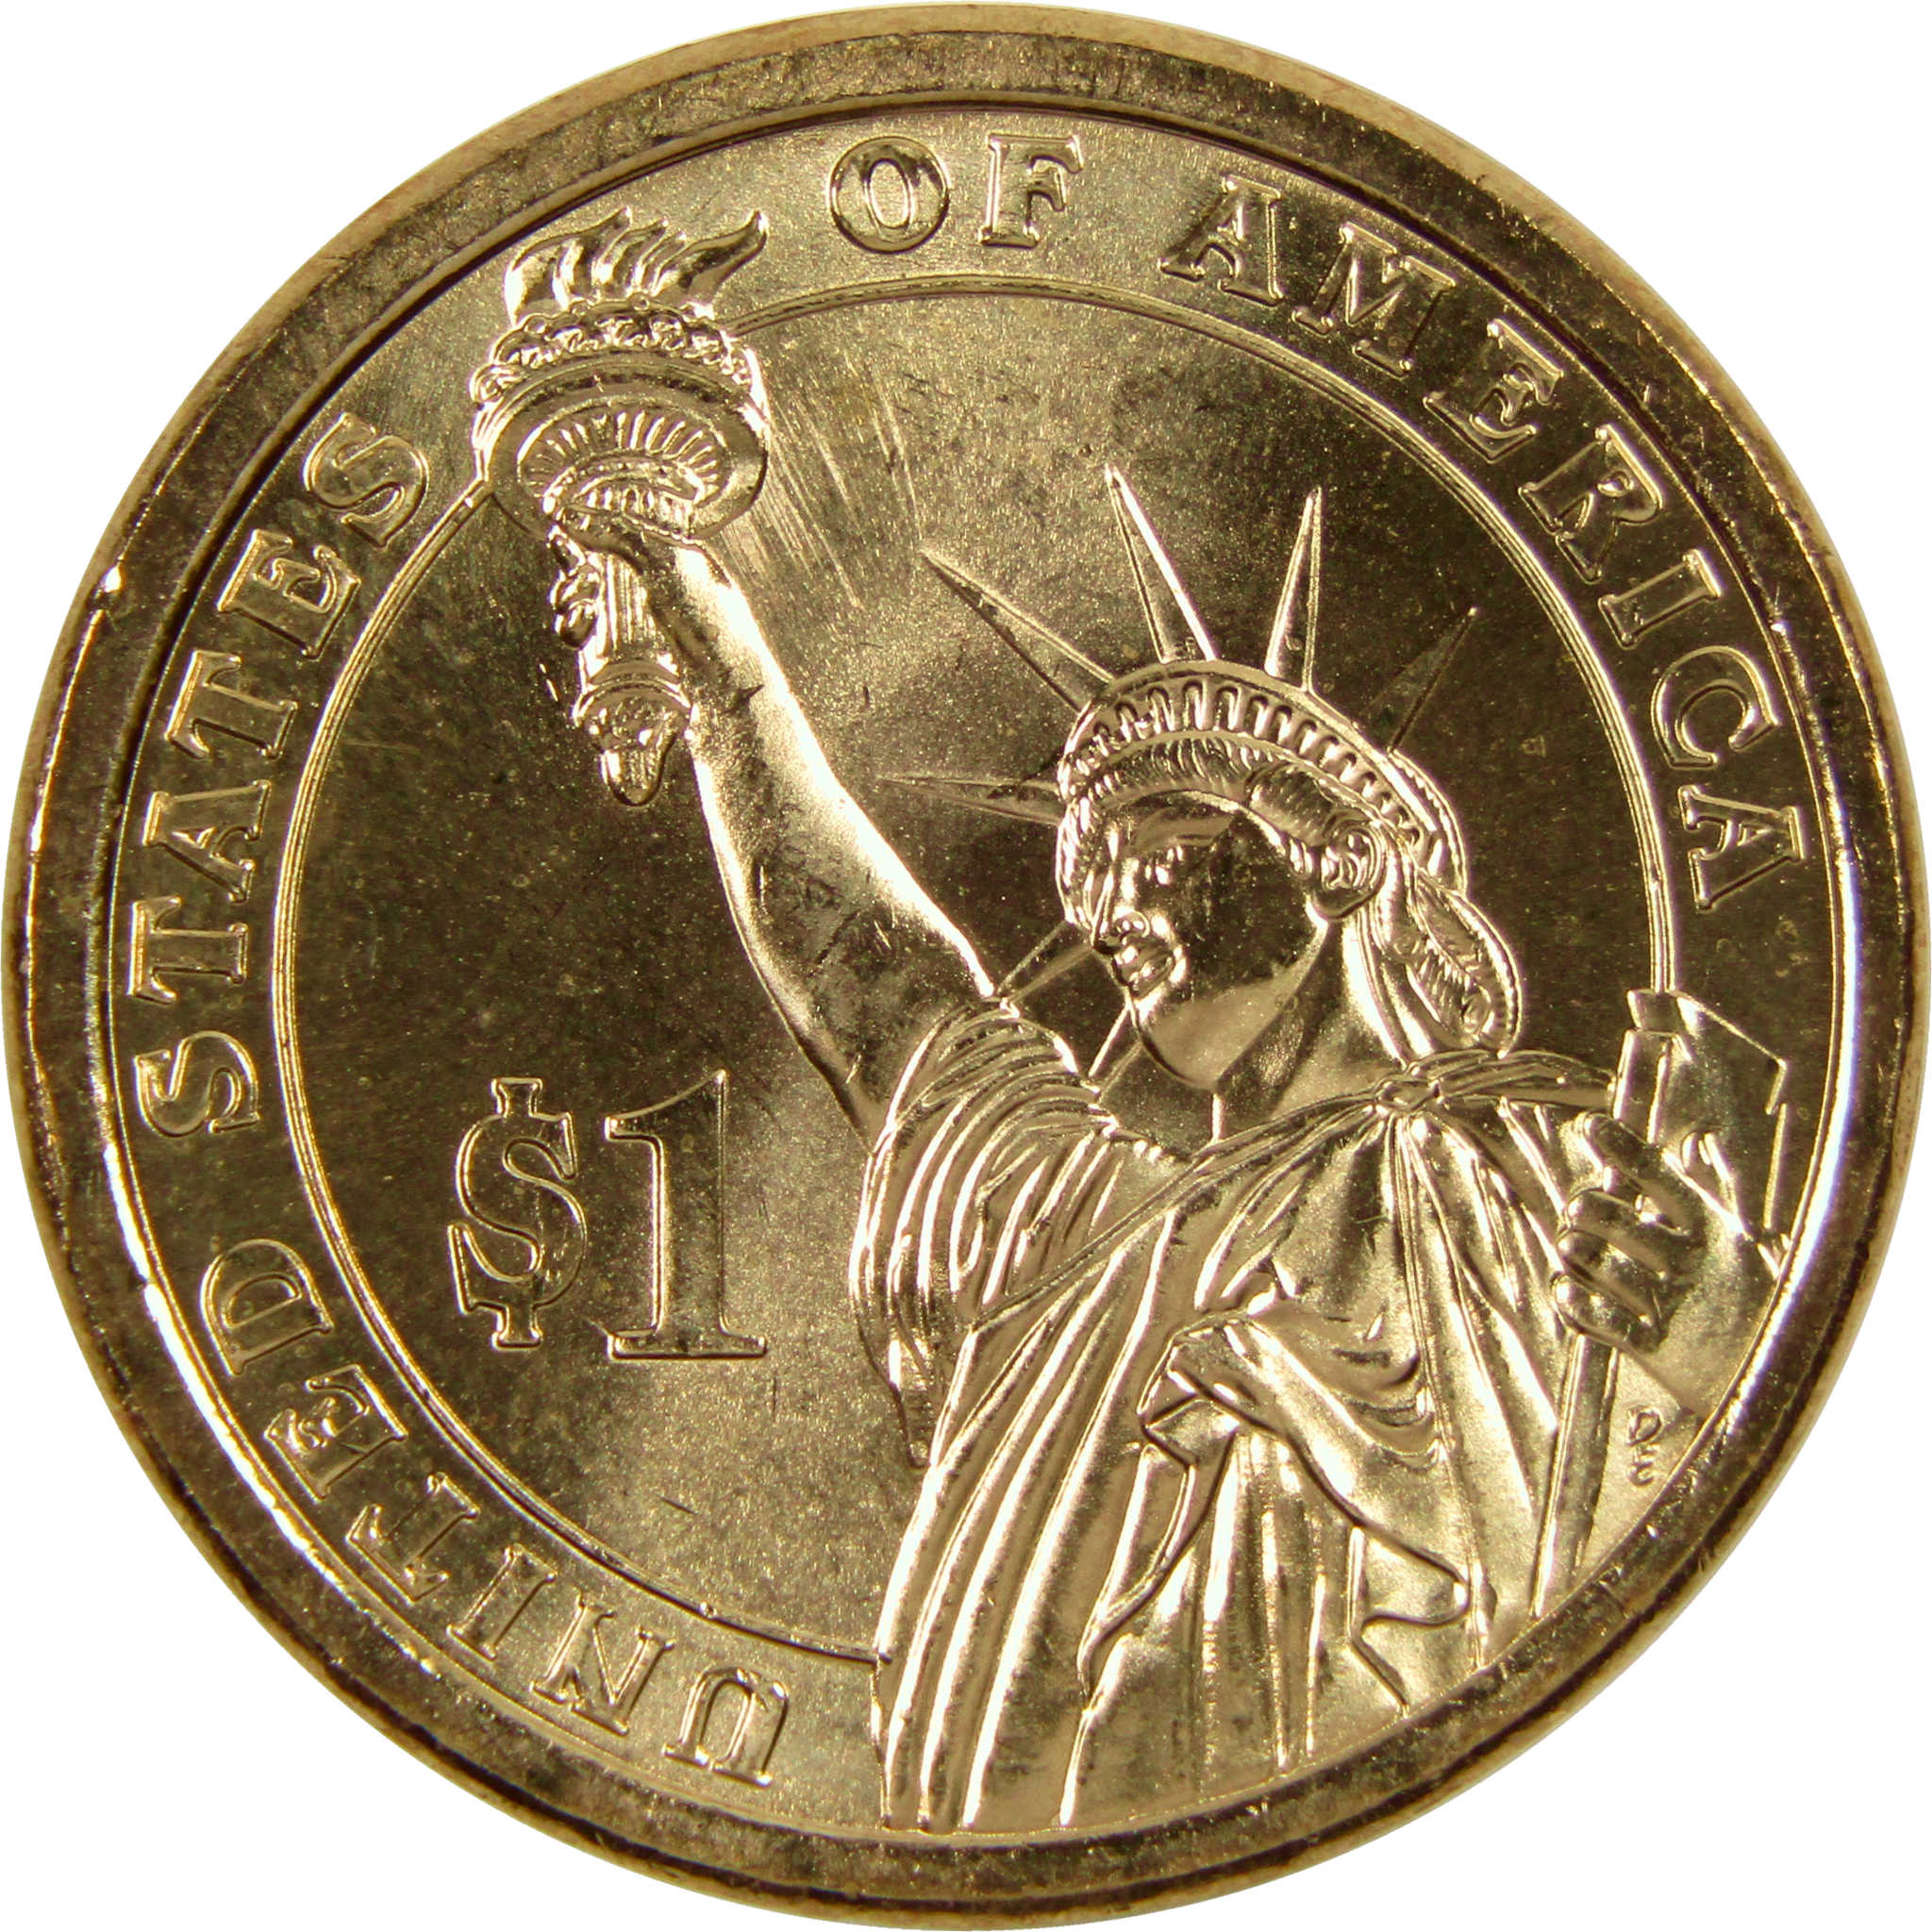 2022 P, D American Innovation 8 Coin Set 1 Dollar Coins